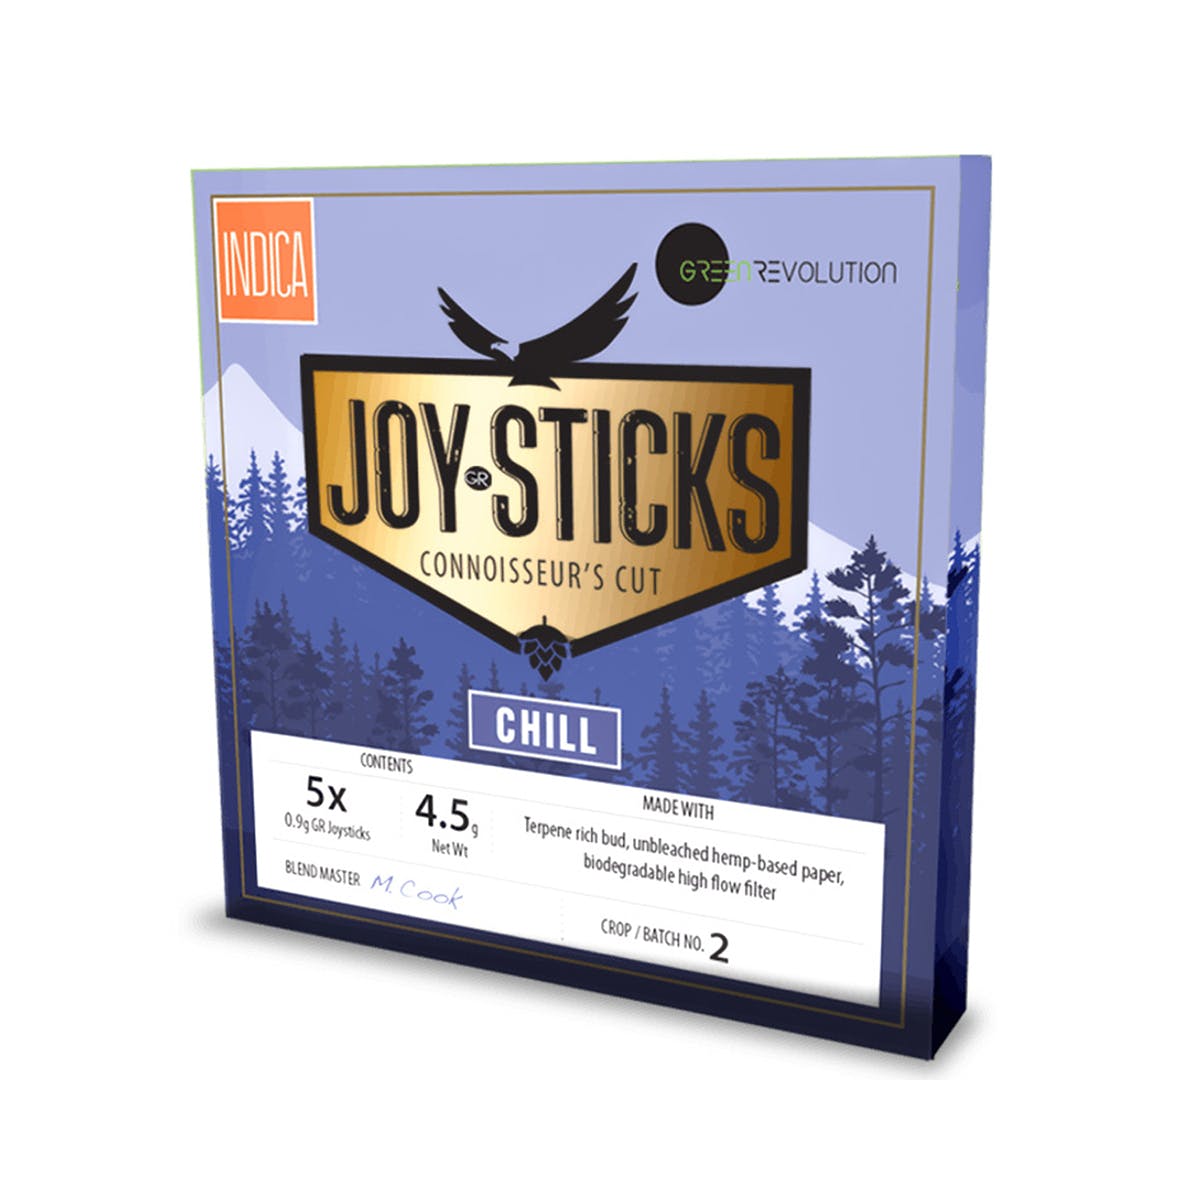 Joysticks - Chill 5x (4.5g)